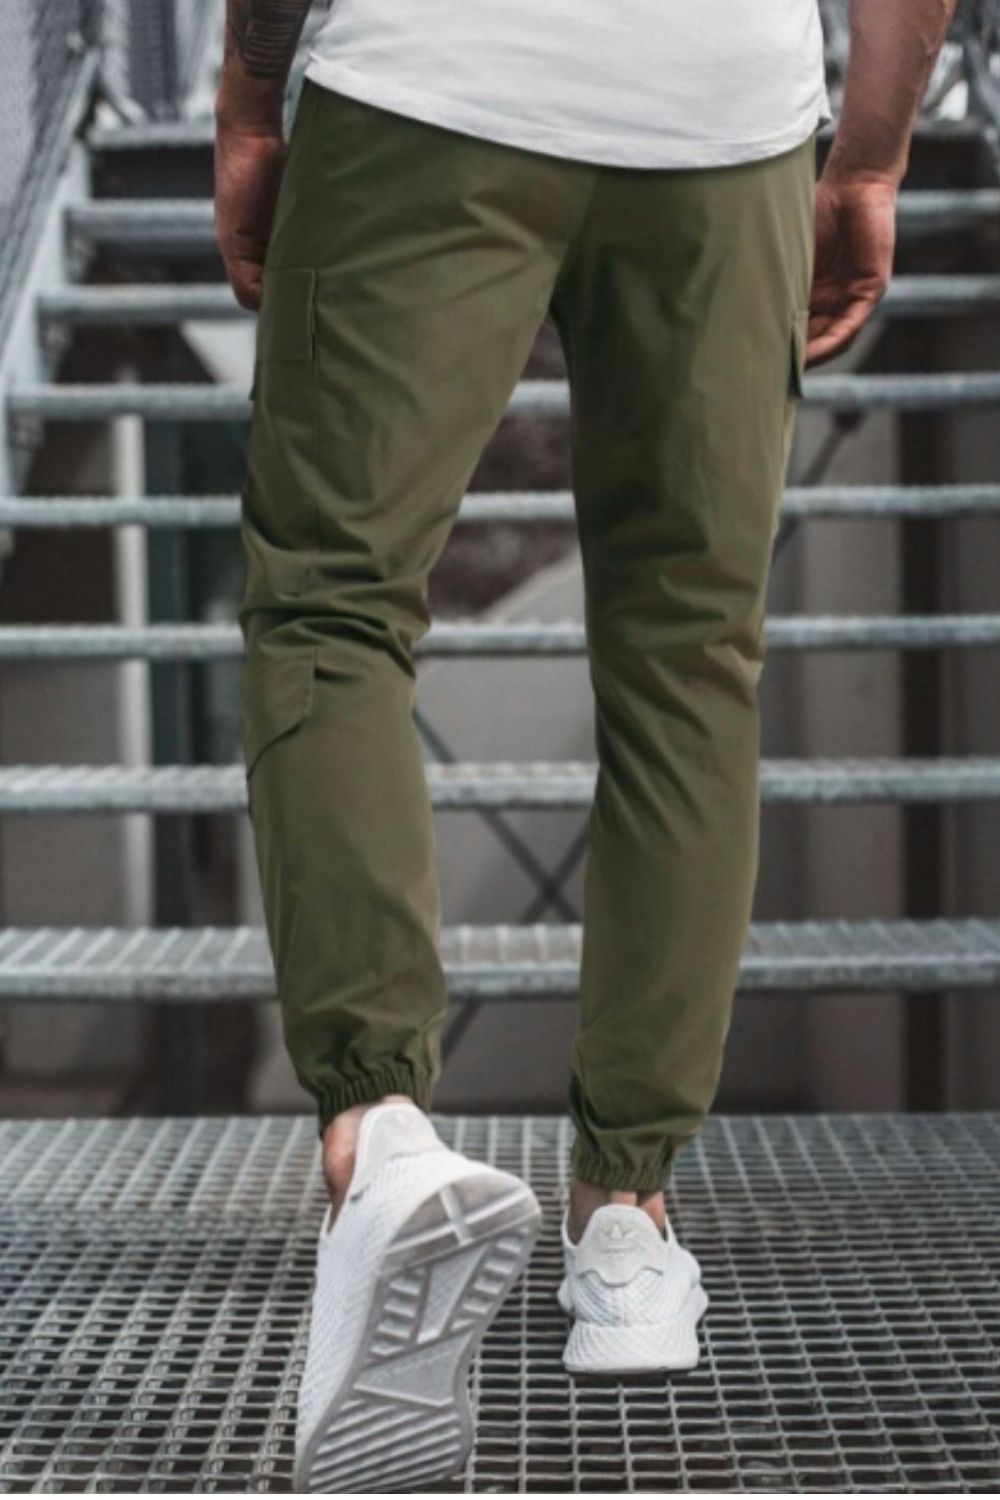 Mens Fashion Athletic Joggers Pants - Sweatpants Trousers Cotton Cargo  Pants Mens Long Pants Large Khaki